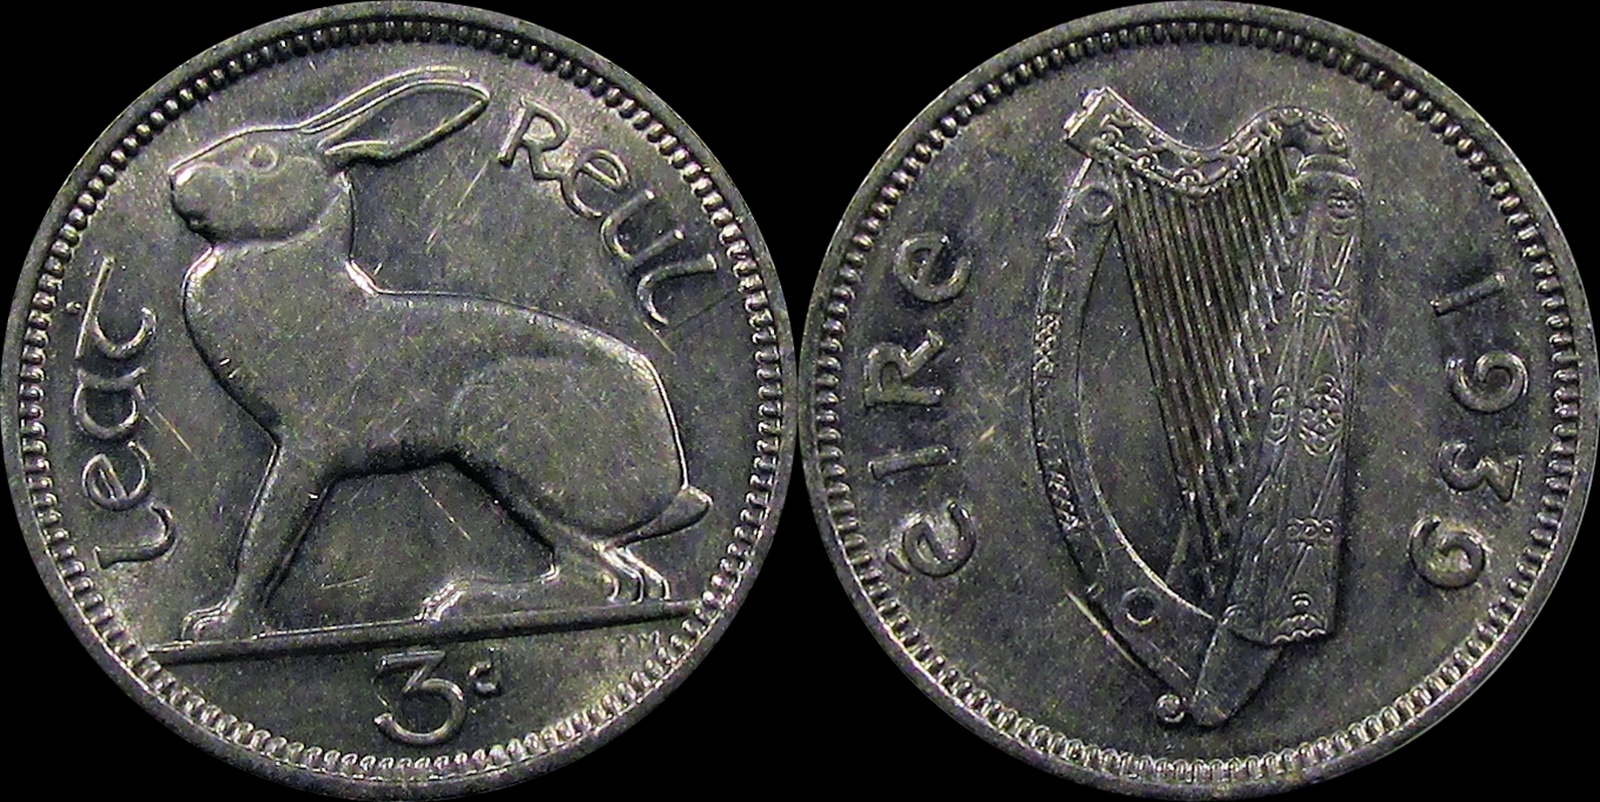 Ireland 1939 3 Pence xf.jpg